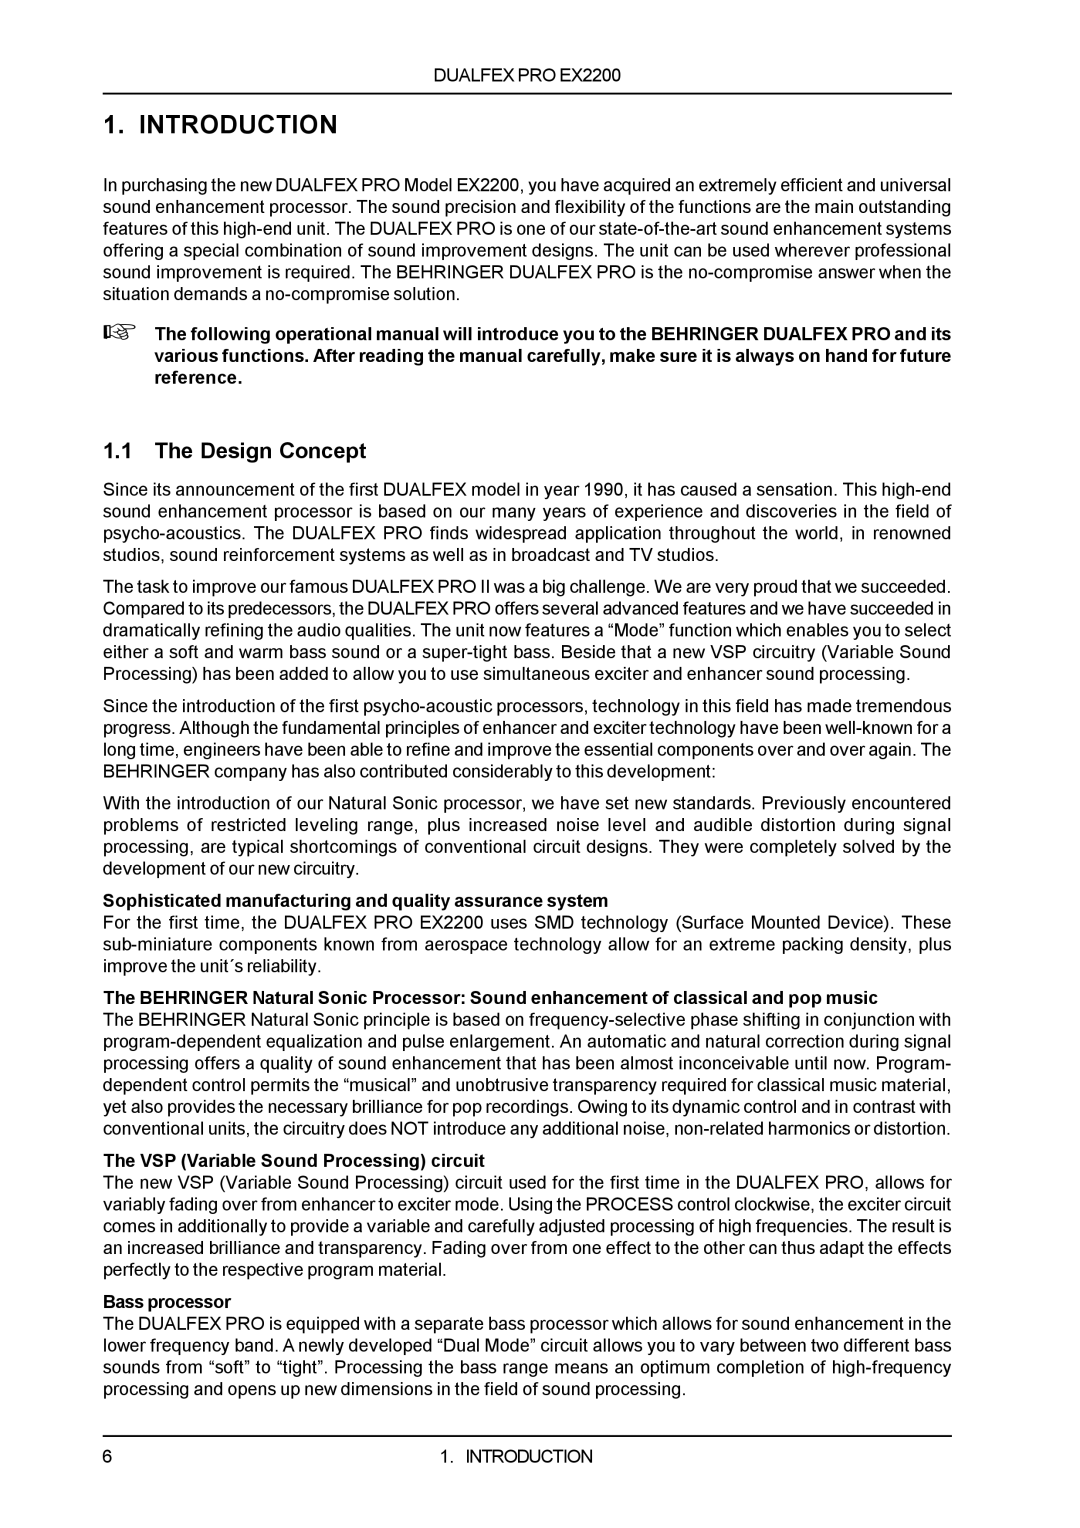 Behringer EX2200 manual Introduction, The Design Concept 